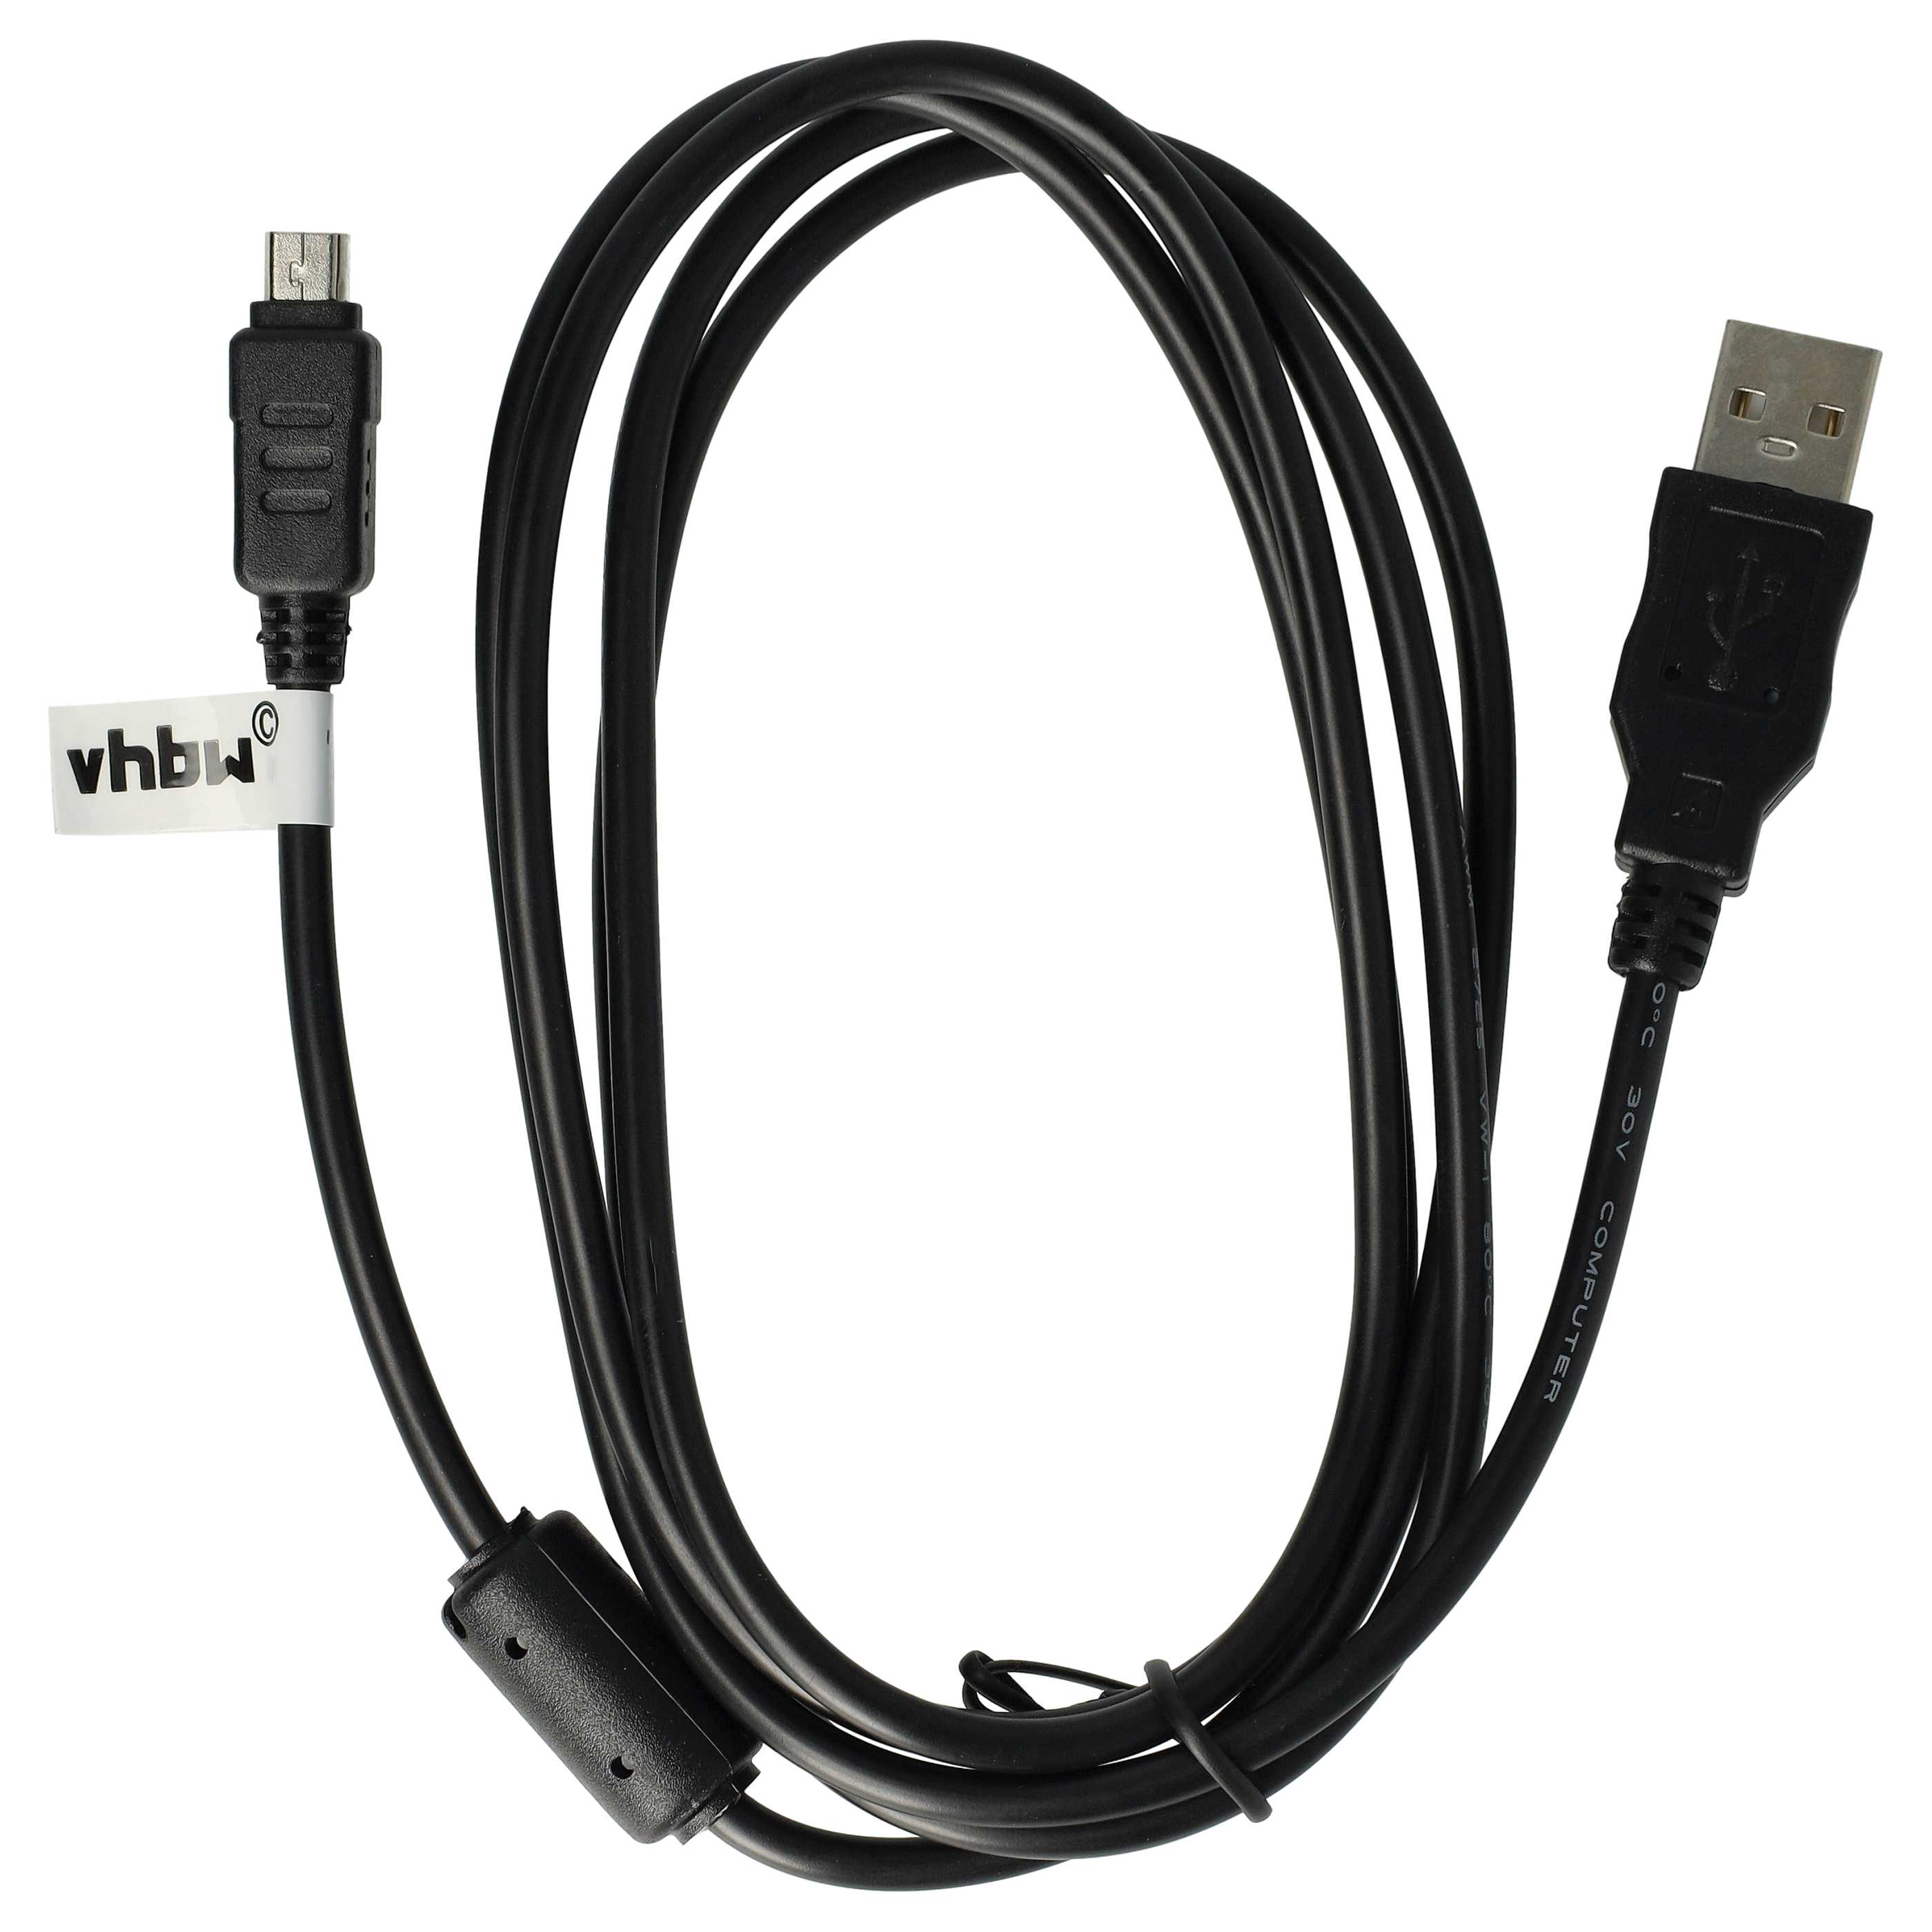 USB Datenkabel als Ersatz für Olympus CB-USB6, CB-USB5, CB-USB8 Kamera - 150 cm